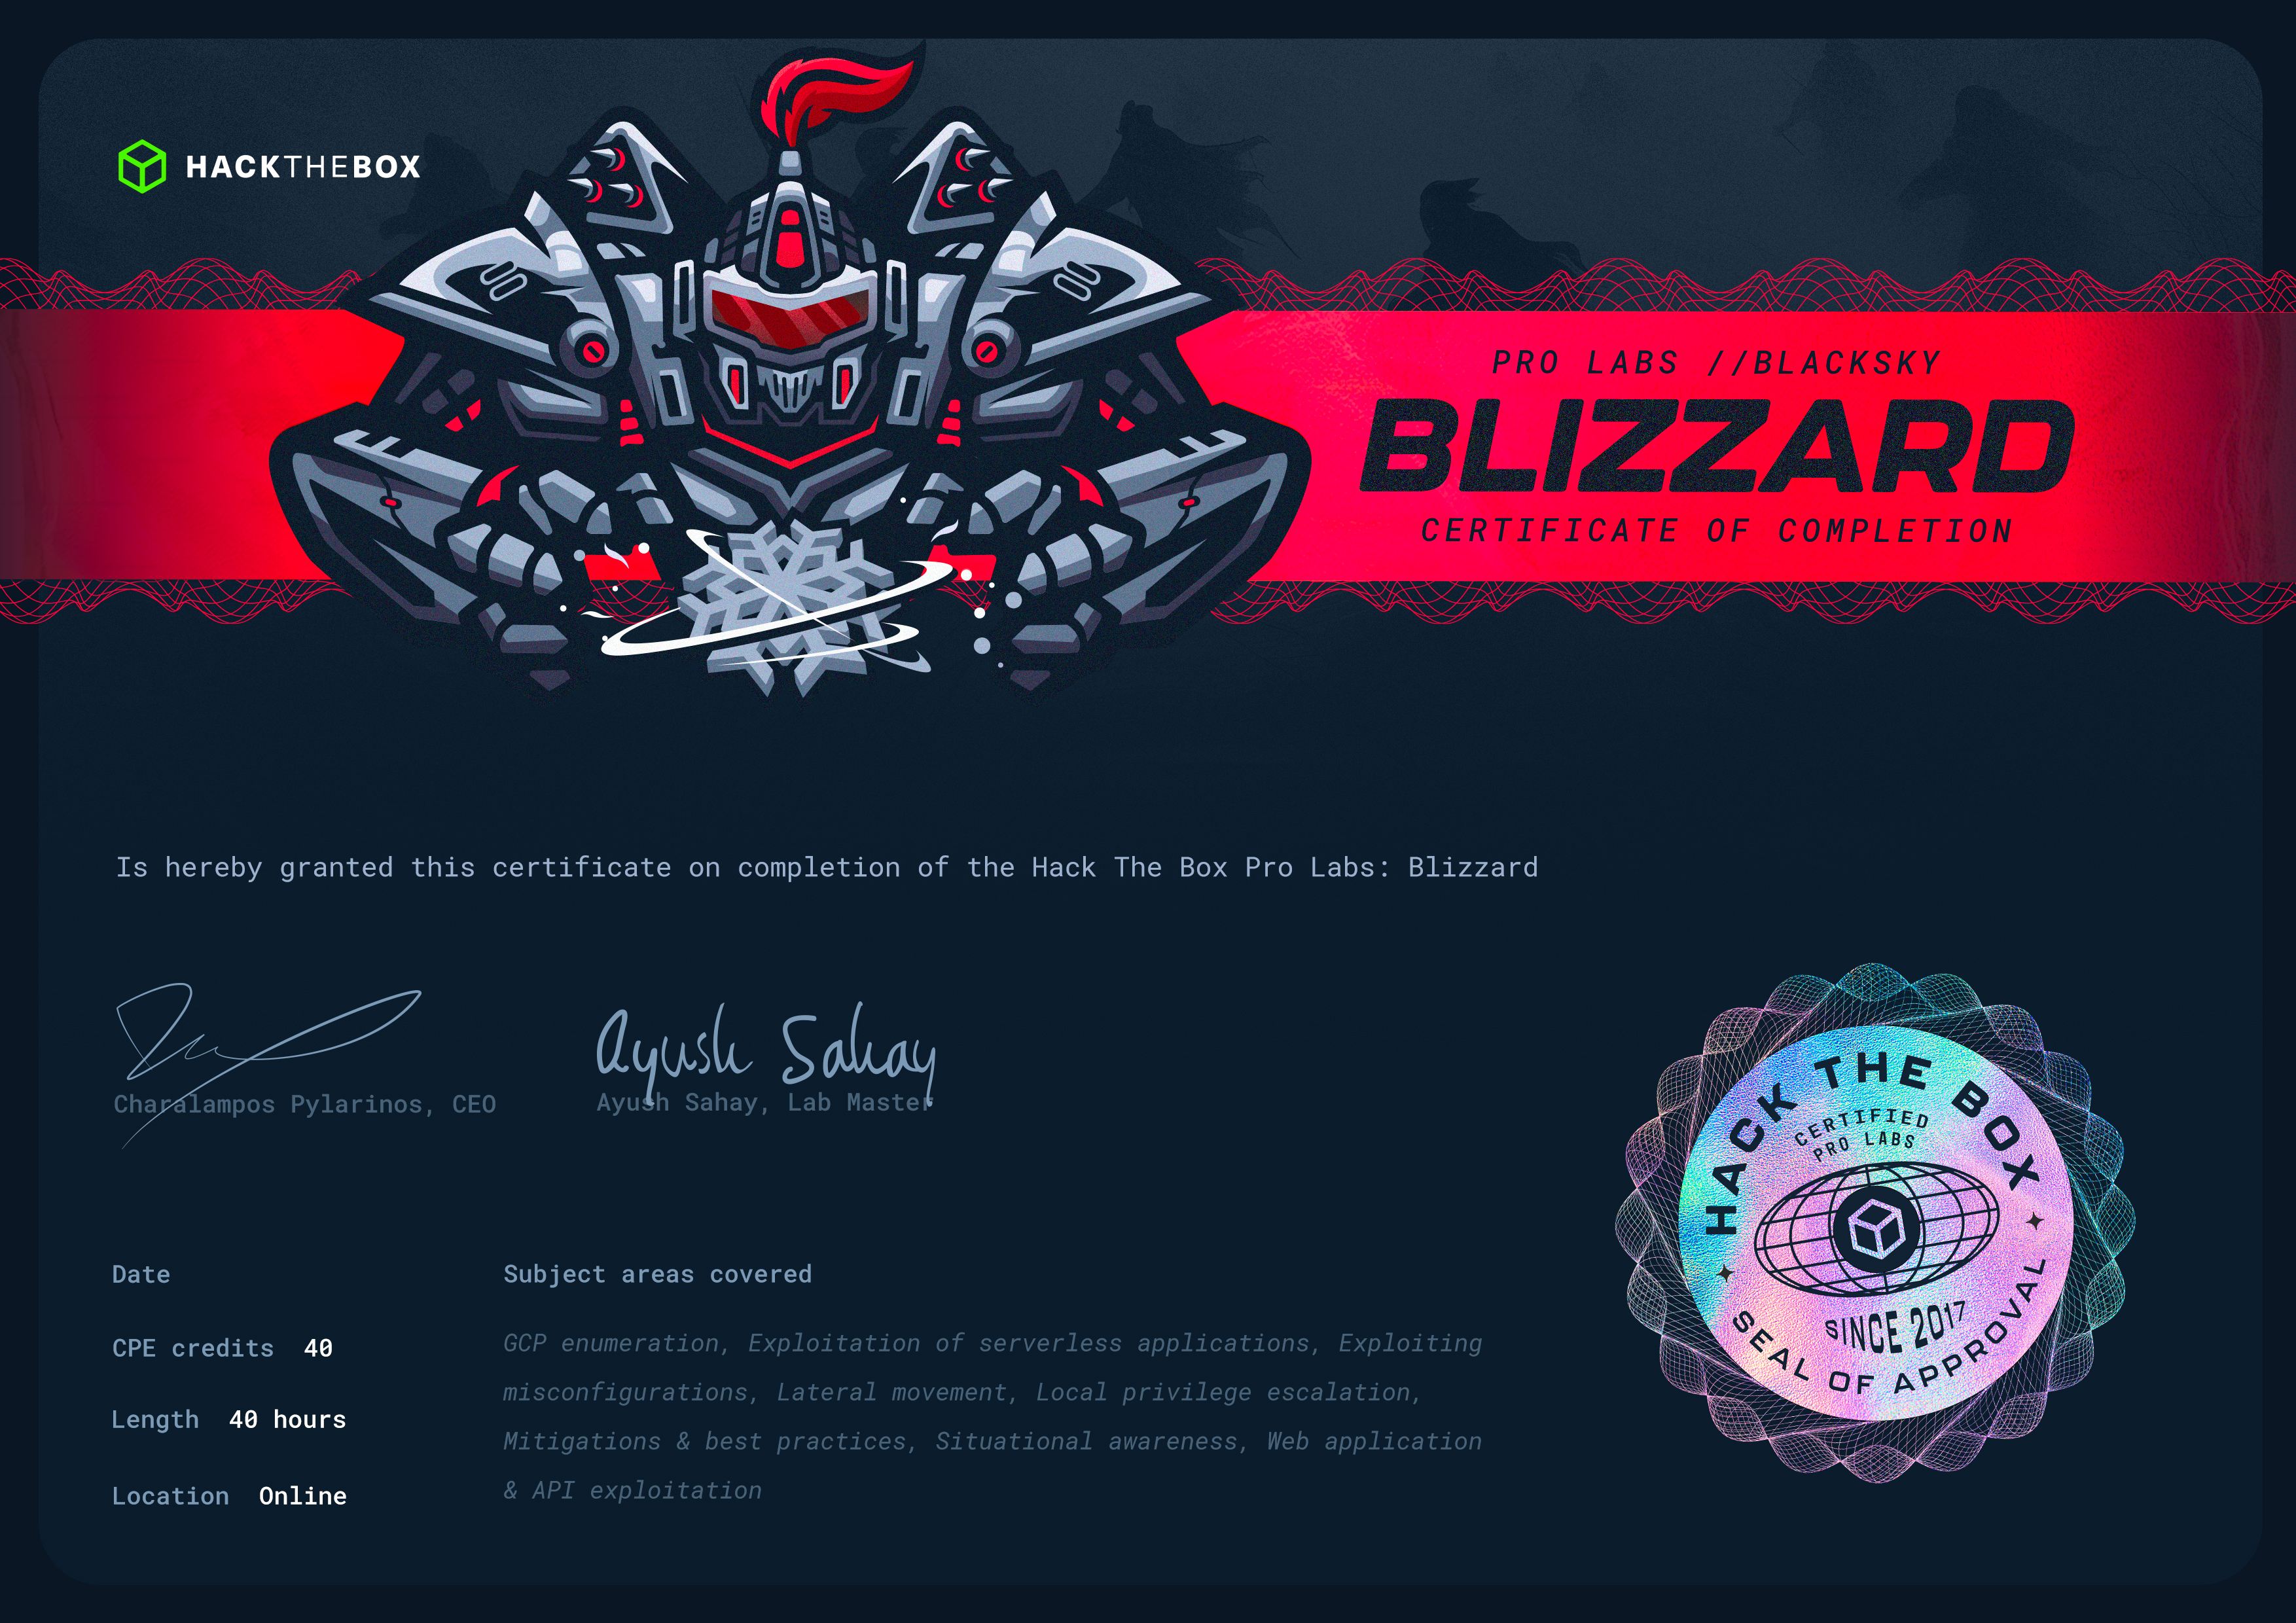 Blizzard Certificate